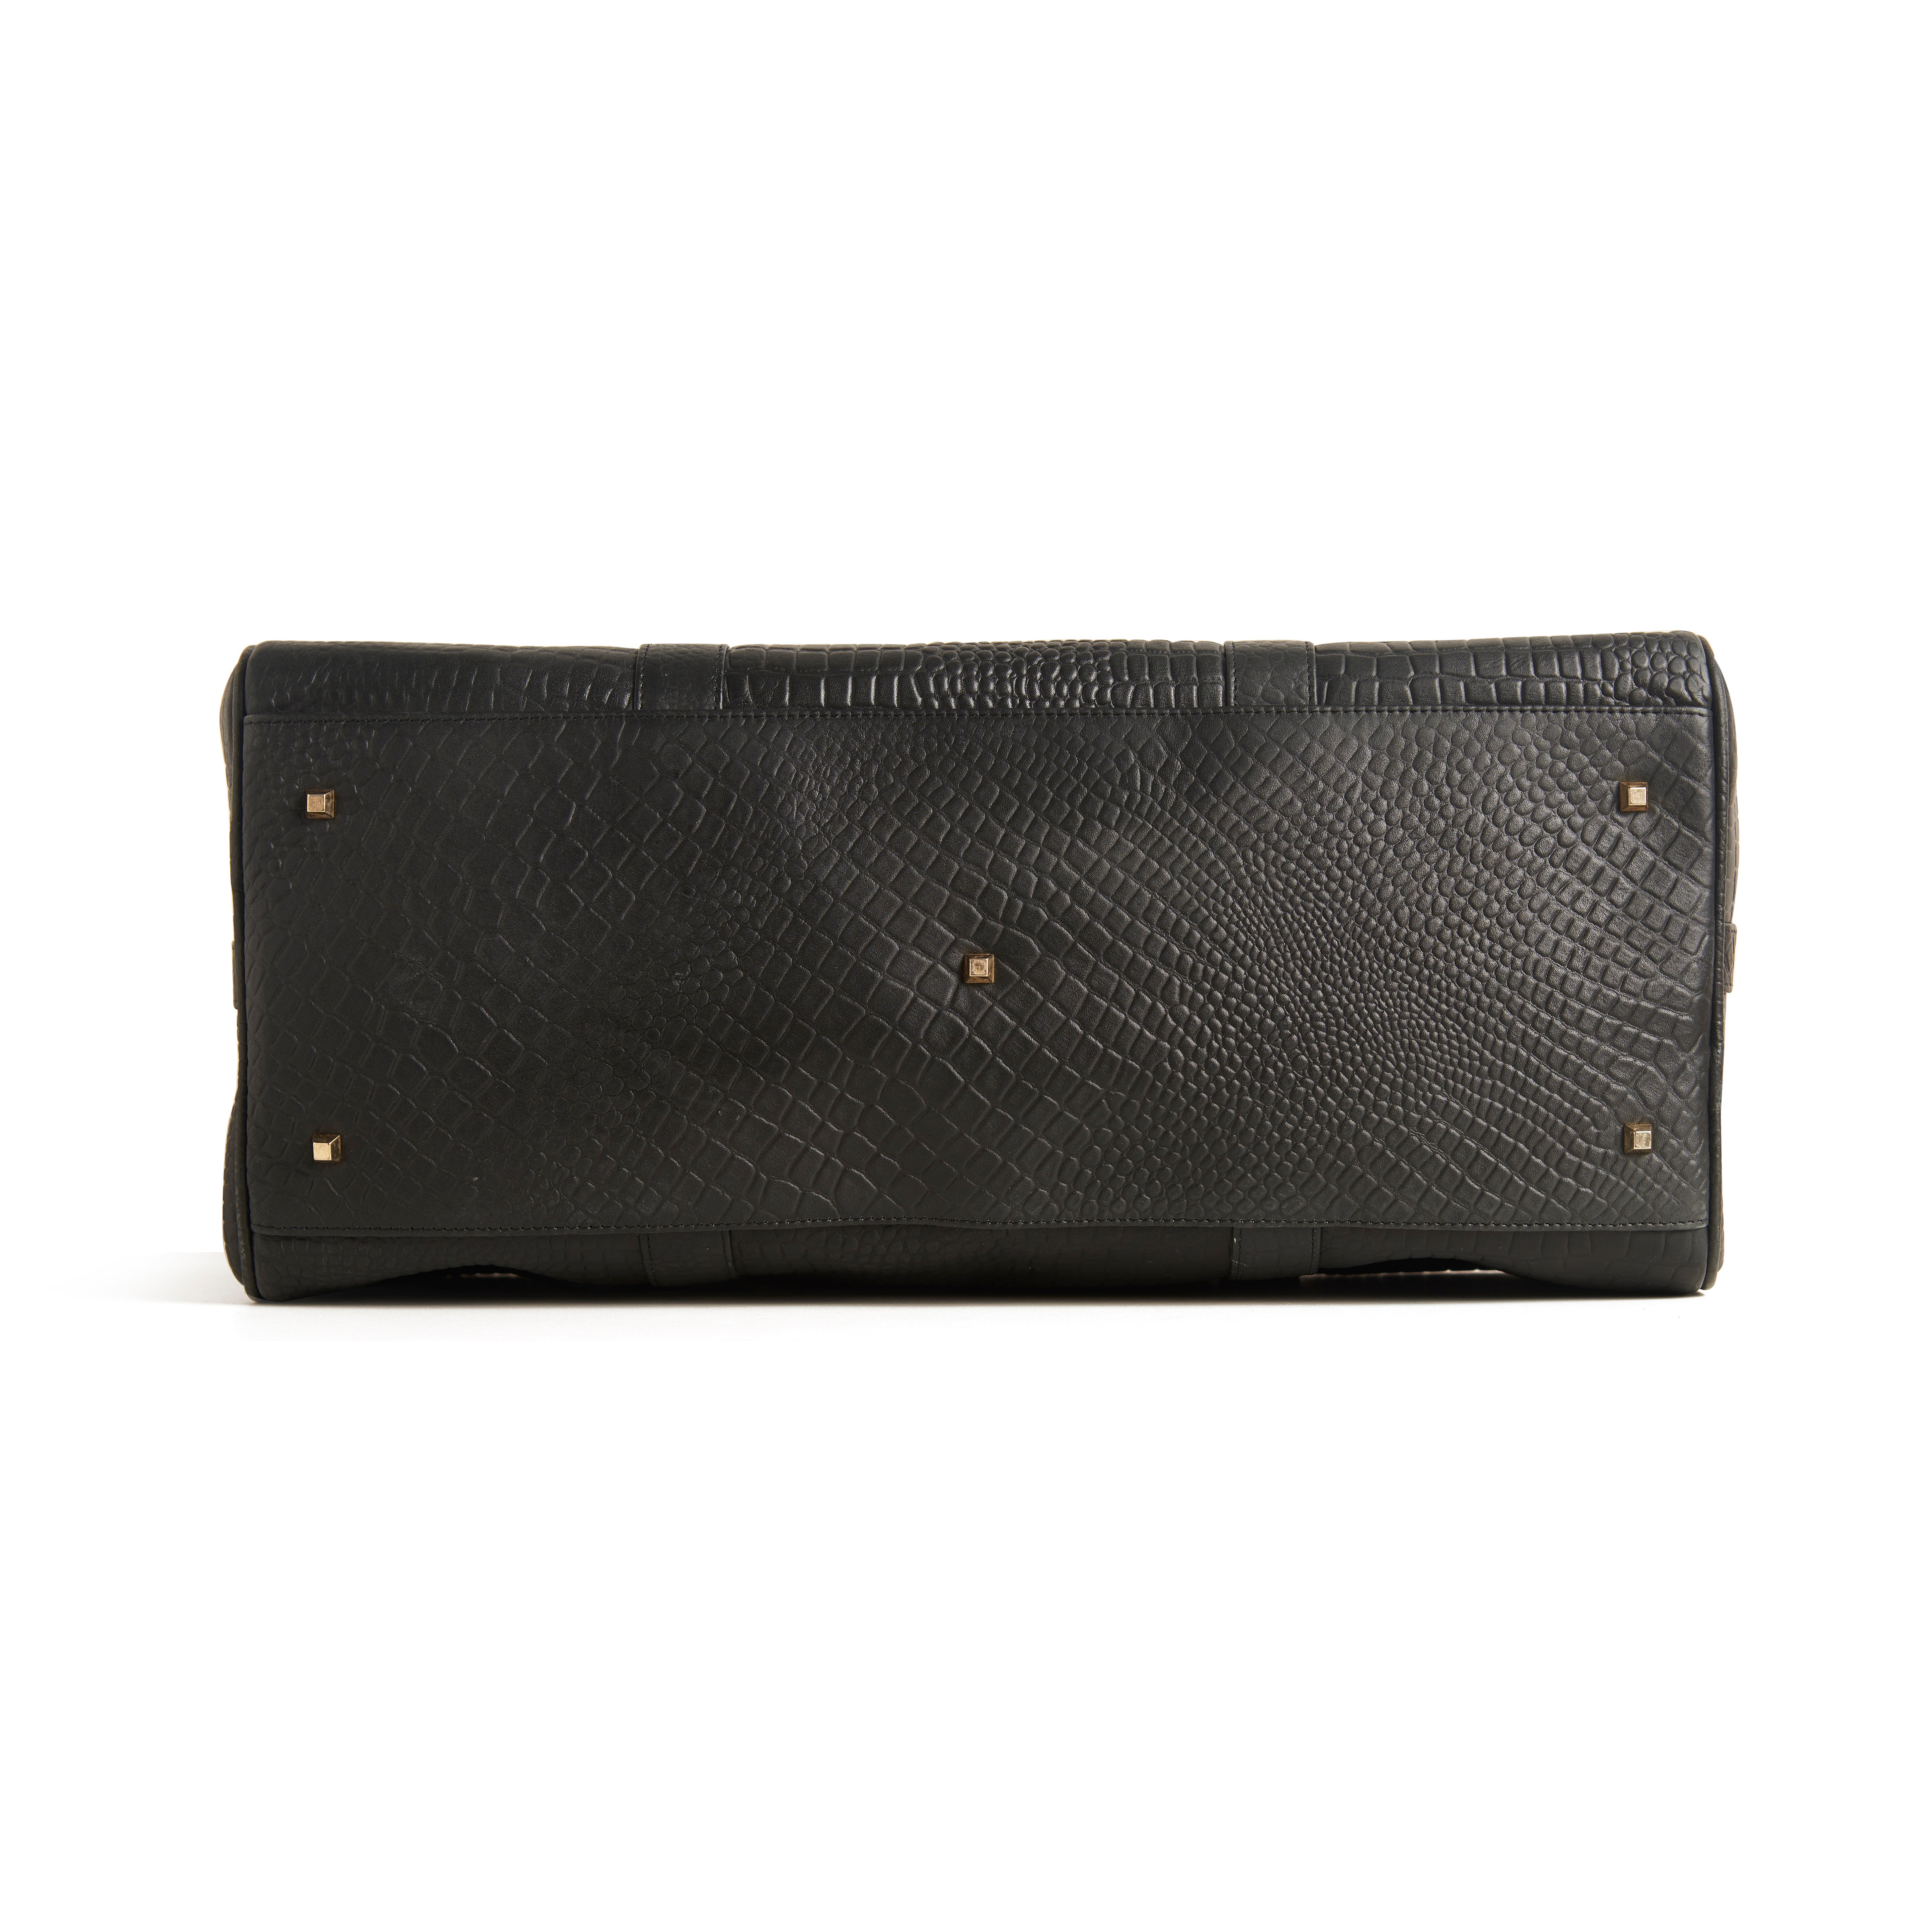 Satchel Leather Duffel Bag